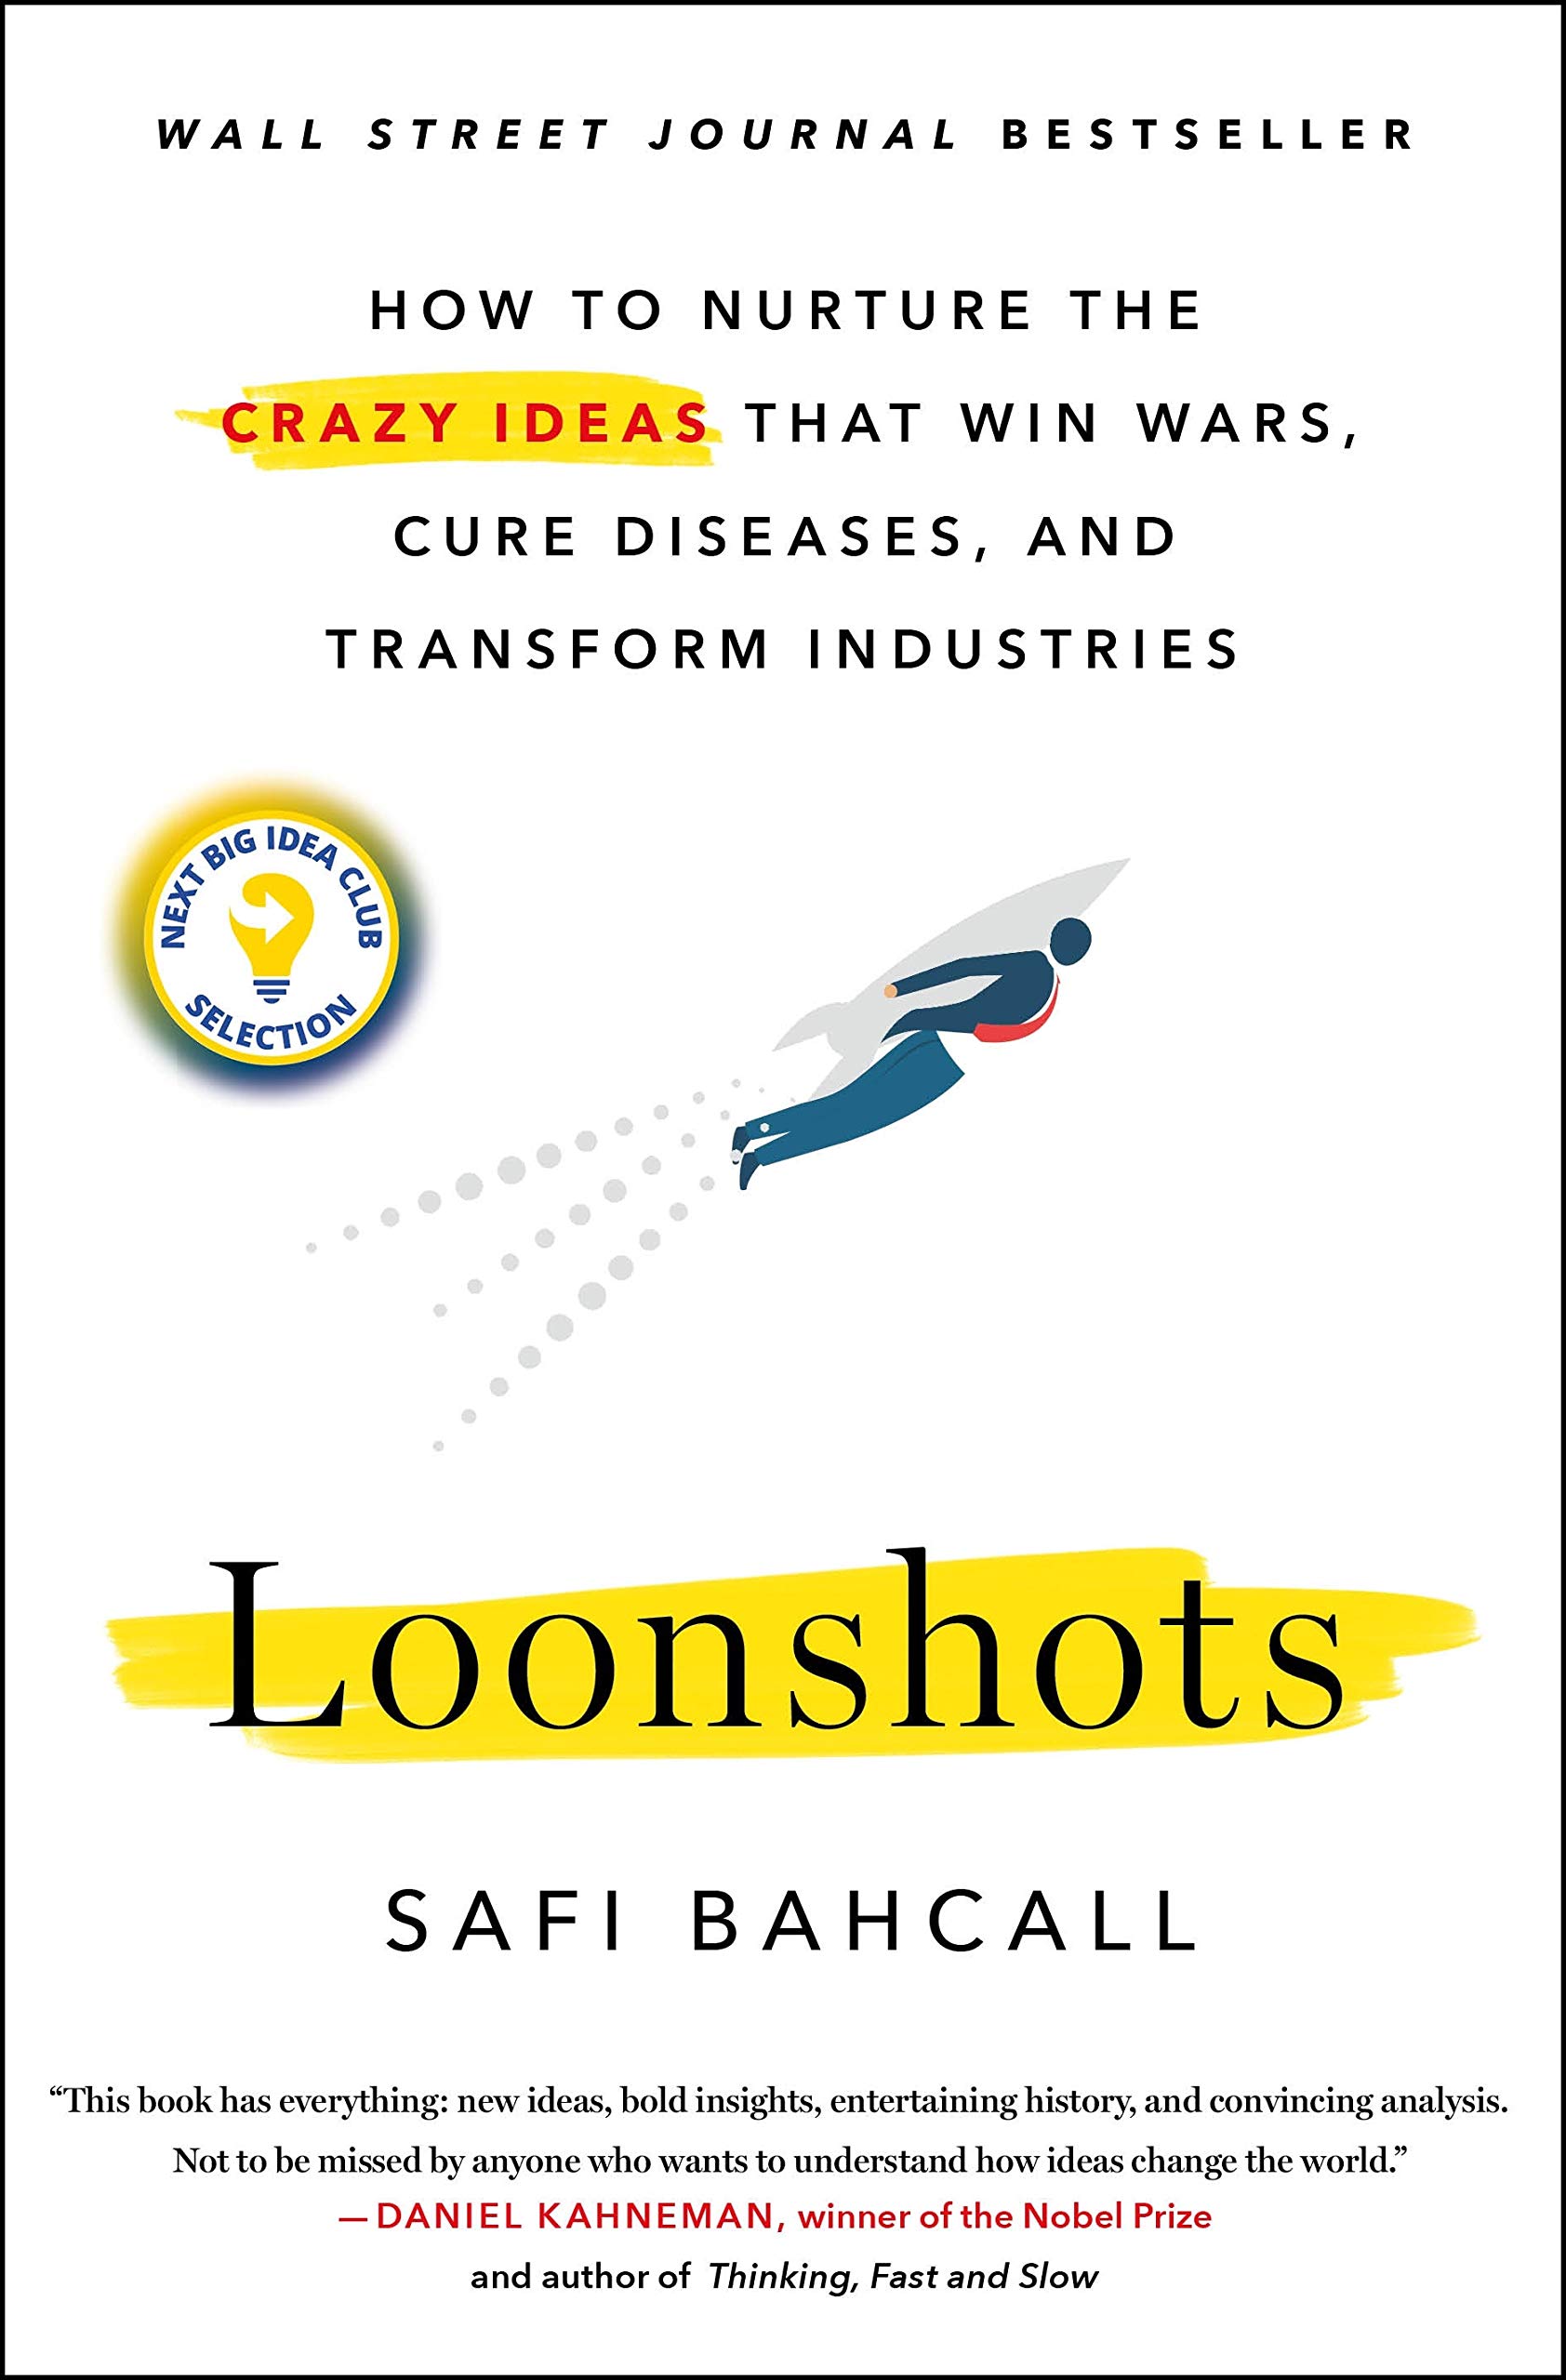 Safi Bahcall: Loonshots (2019, St. Martin's Press)